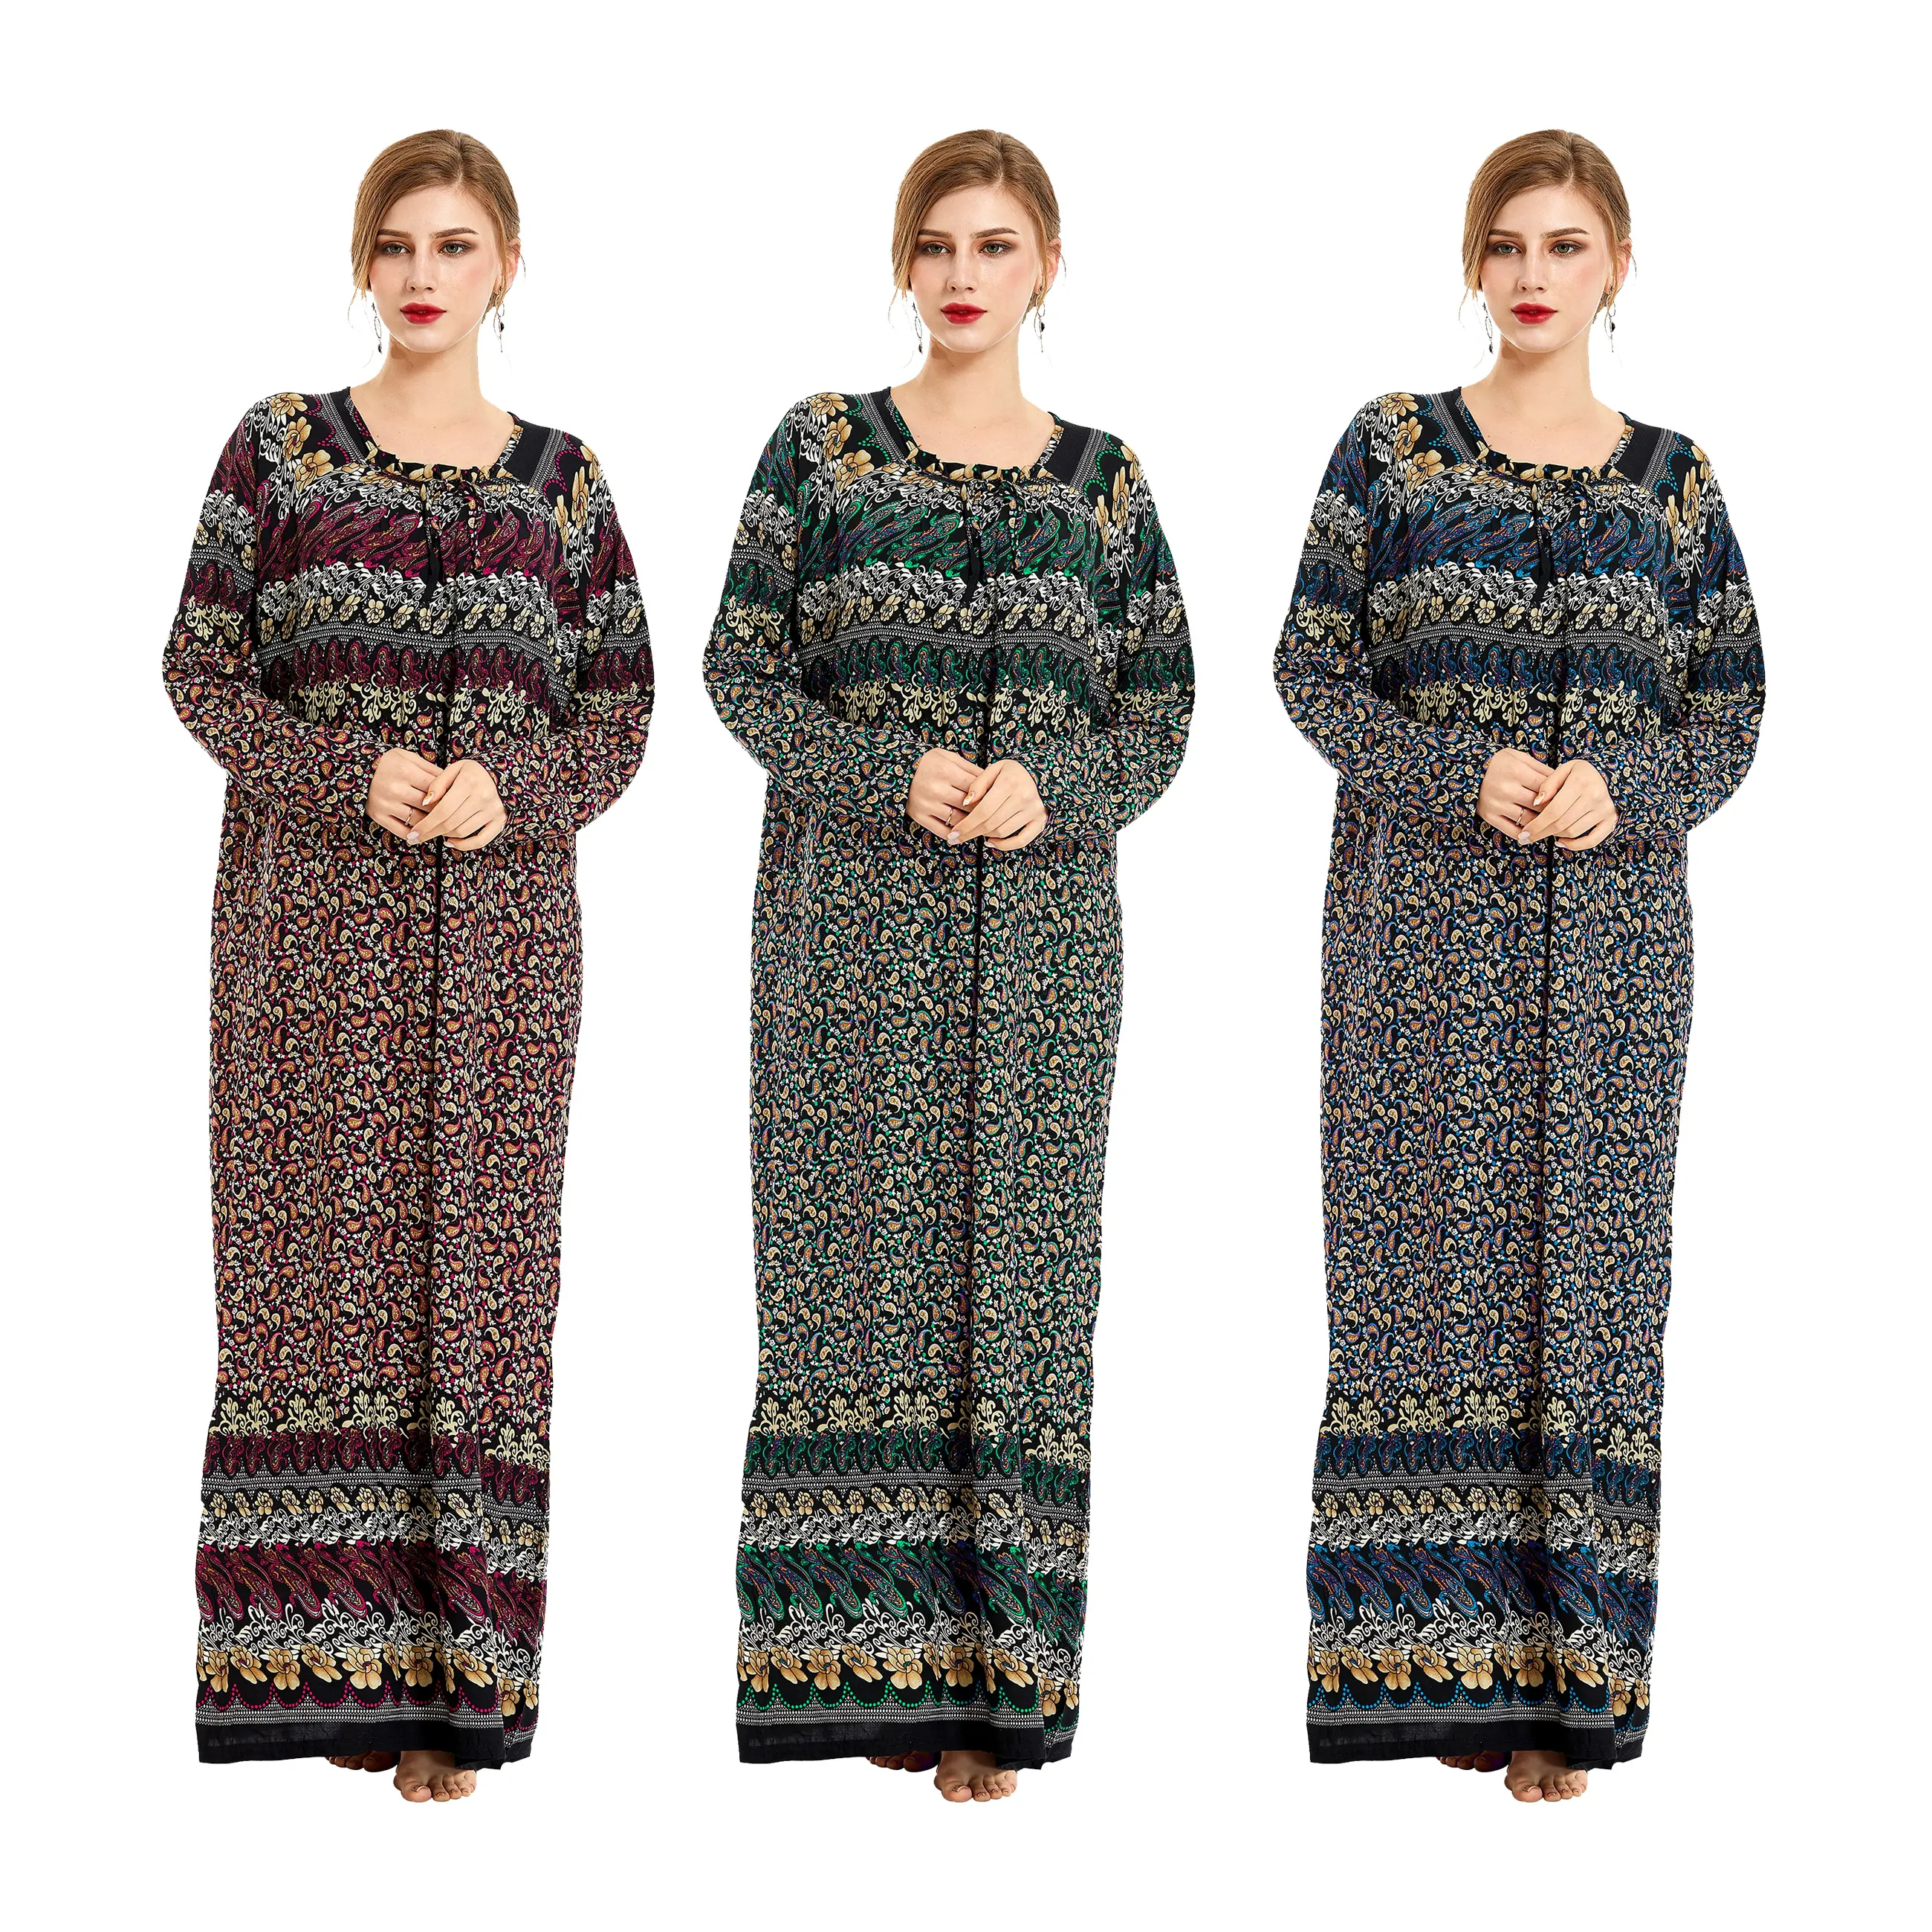 Middle East Traditional Long sleeves plus size maxi dress Islamic Clothing women abaya muslim dresses